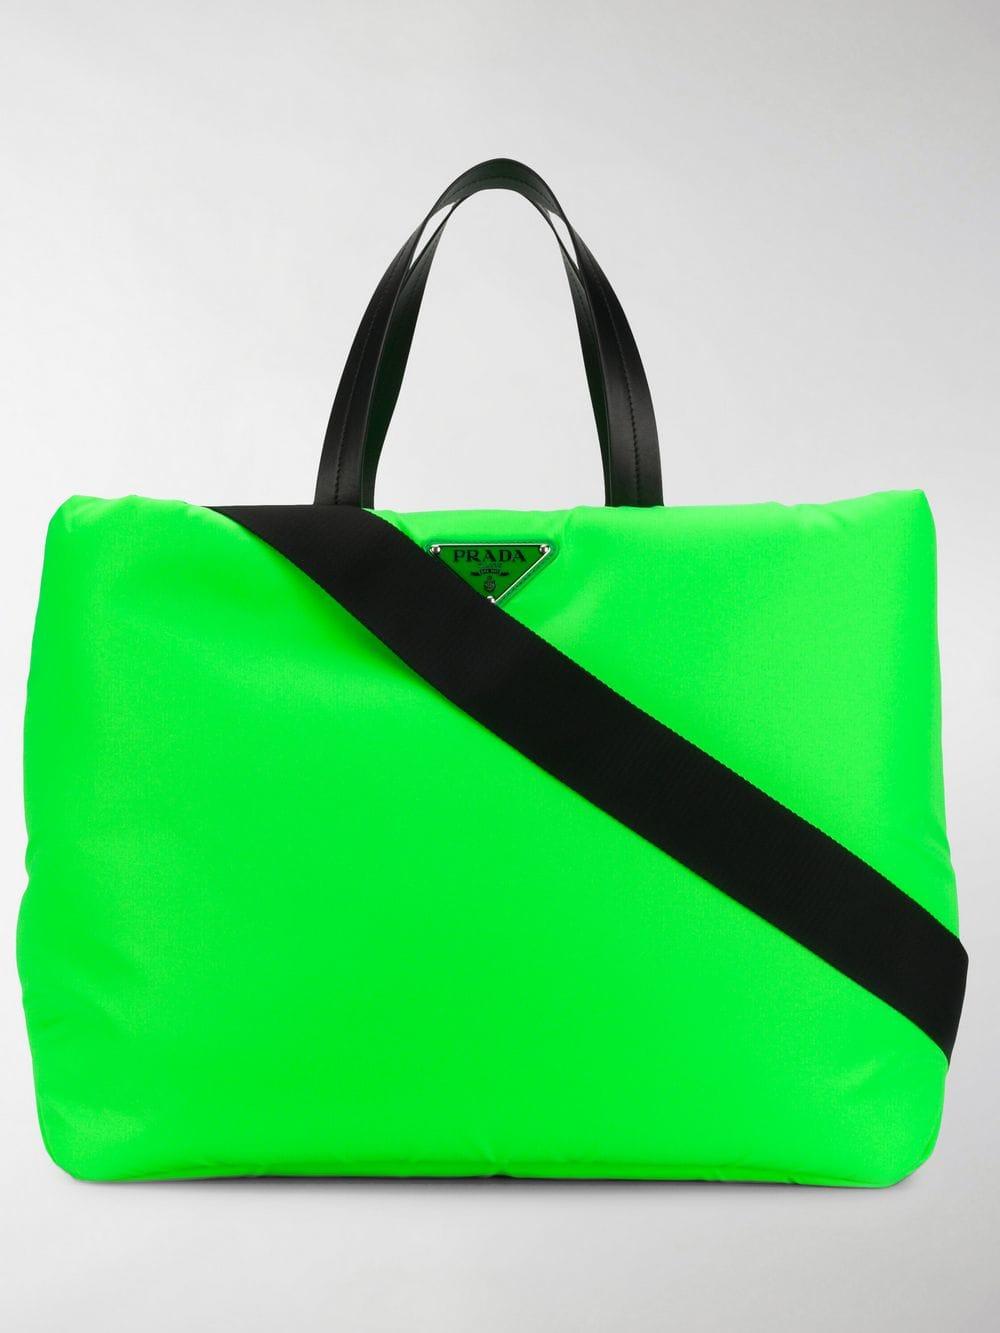 Top 60+ imagen light green prada bag - Abzlocal.mx